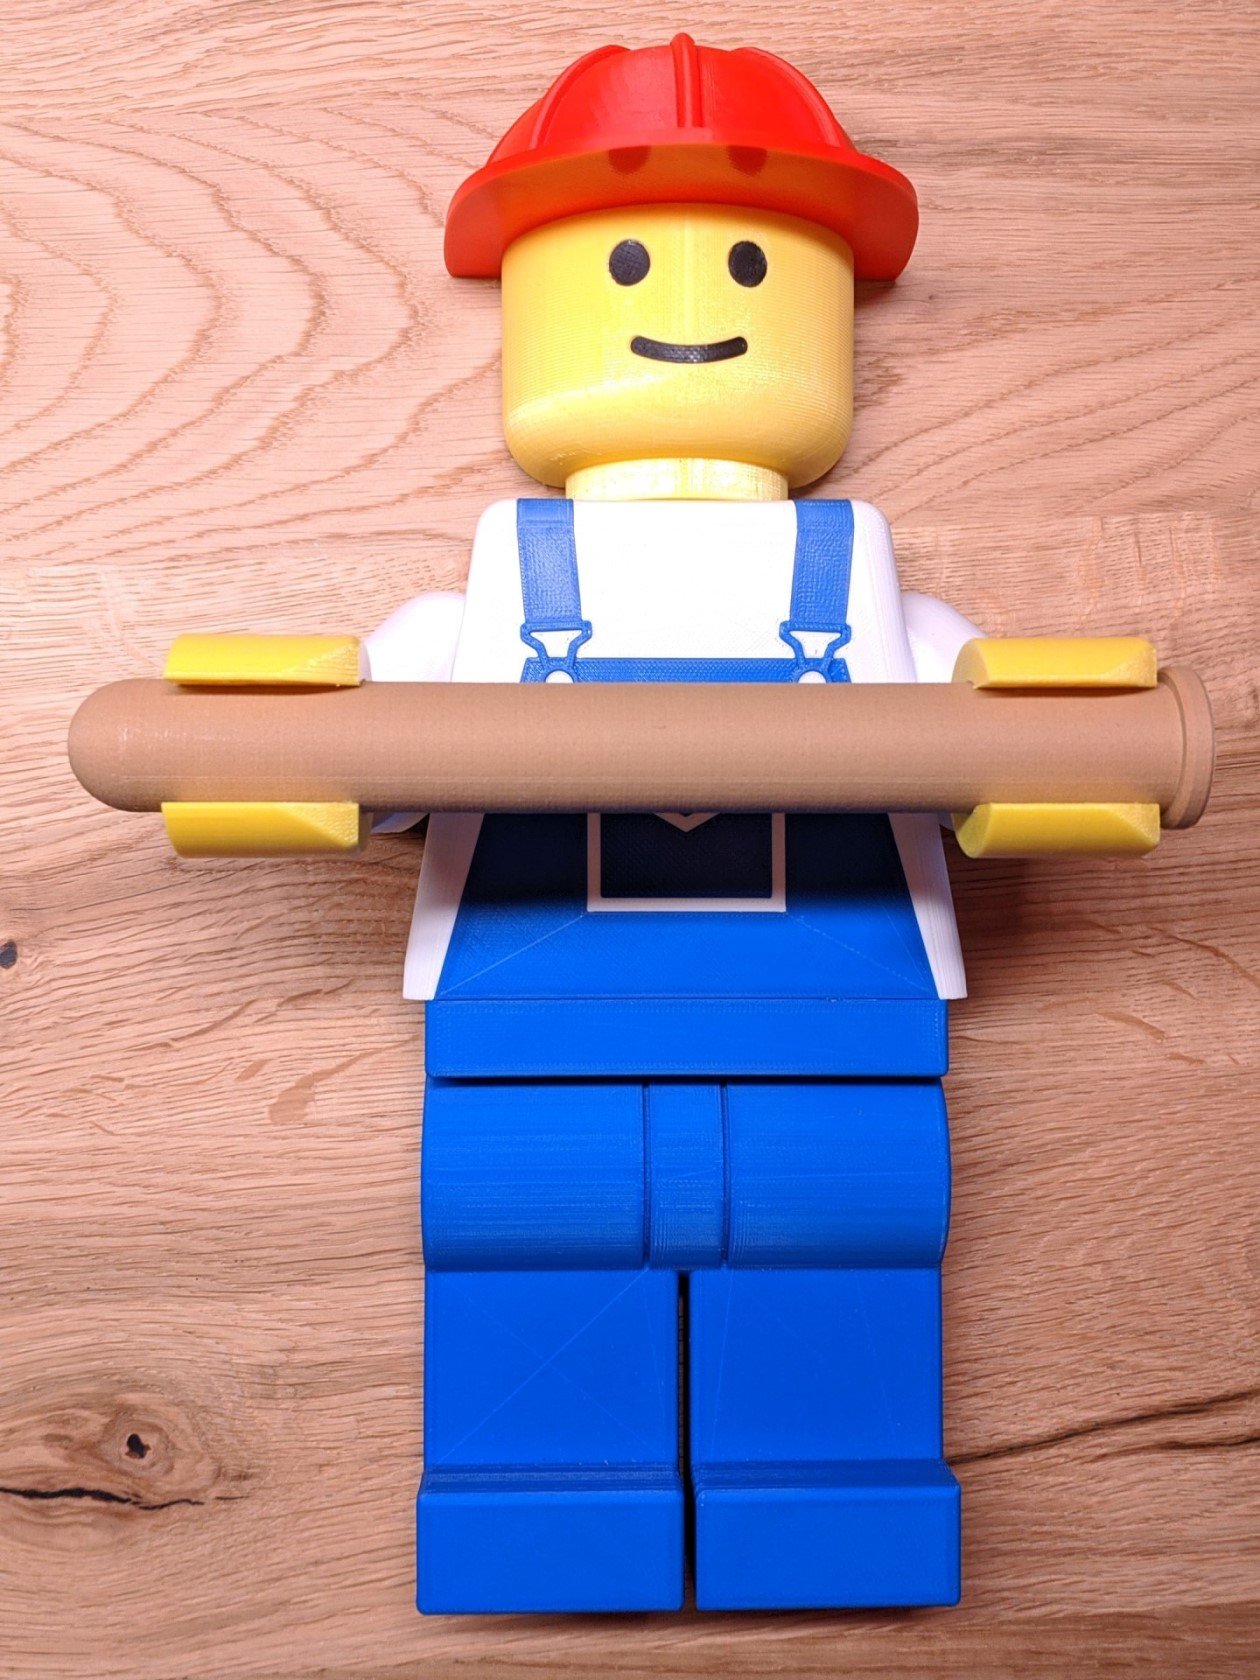 Lego Man "Worker" Toilet Paper Holder